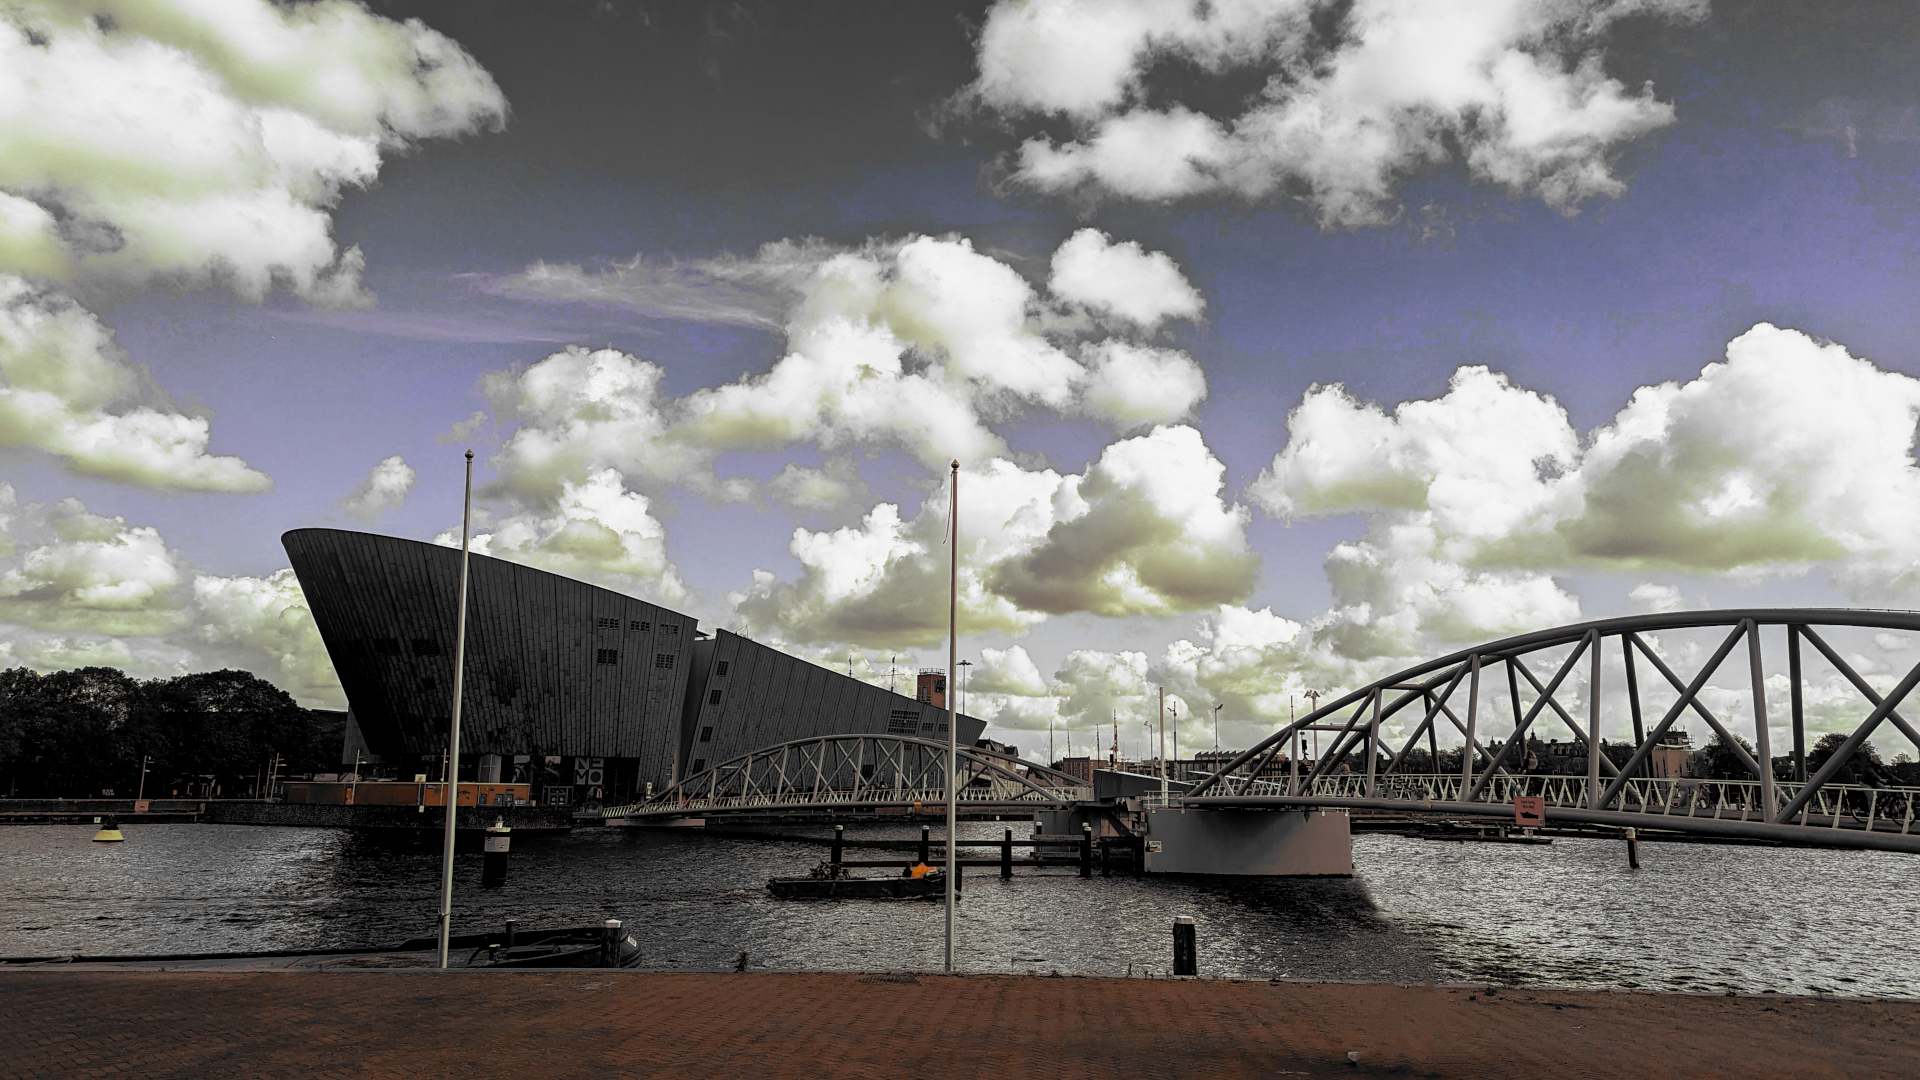 Nemo museum in Amsterdam complete with water and bridge in a darken landscape